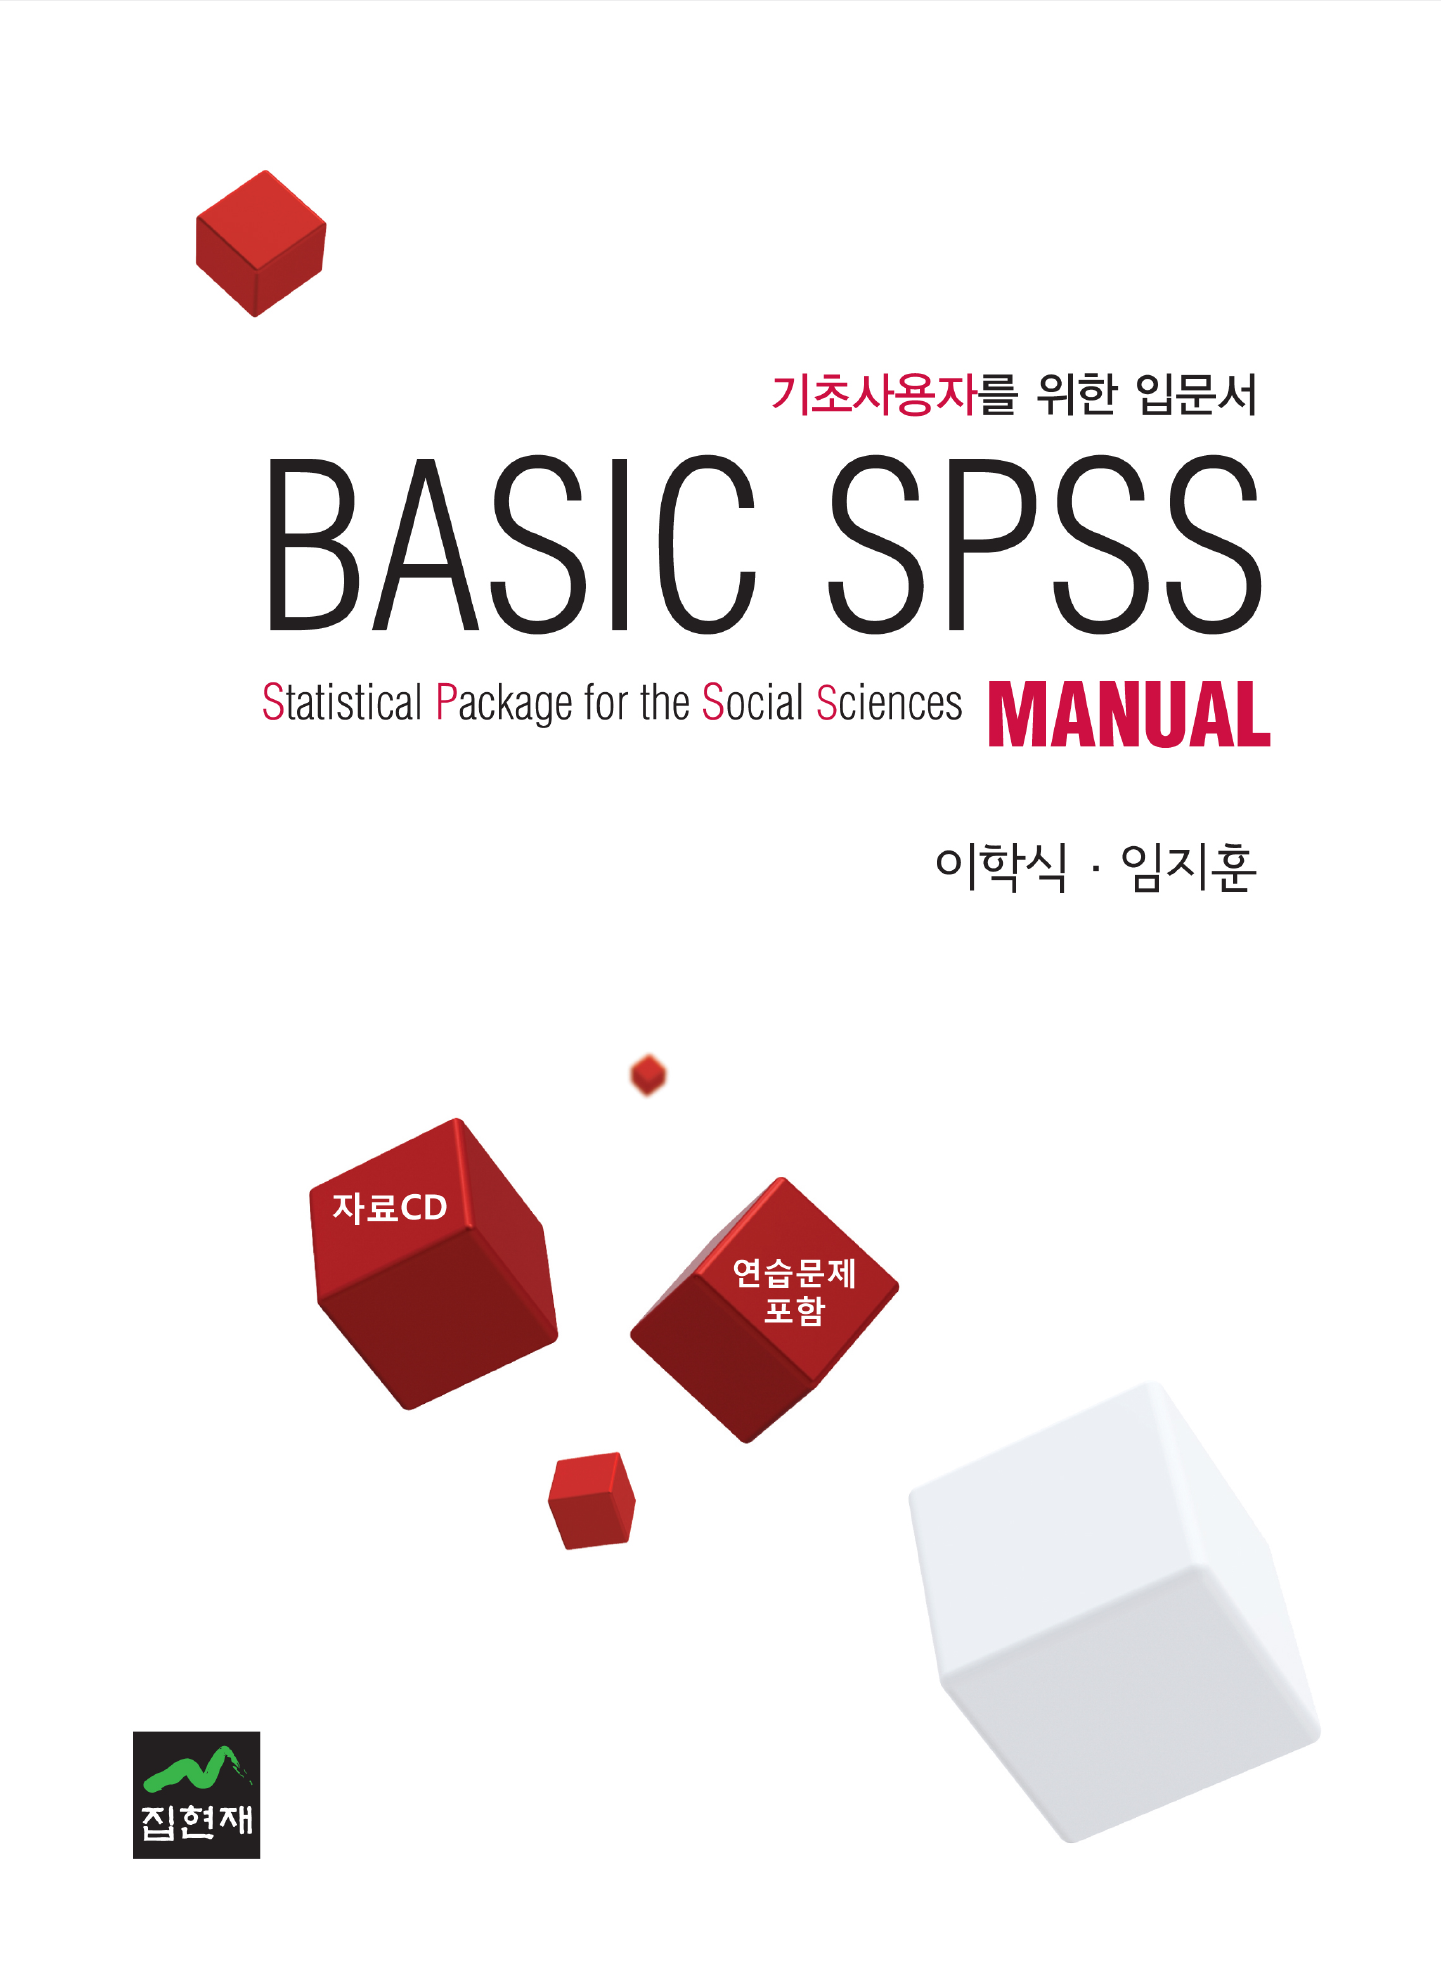 Basic SPSS Manual (기초사용자를 위한 입문서)